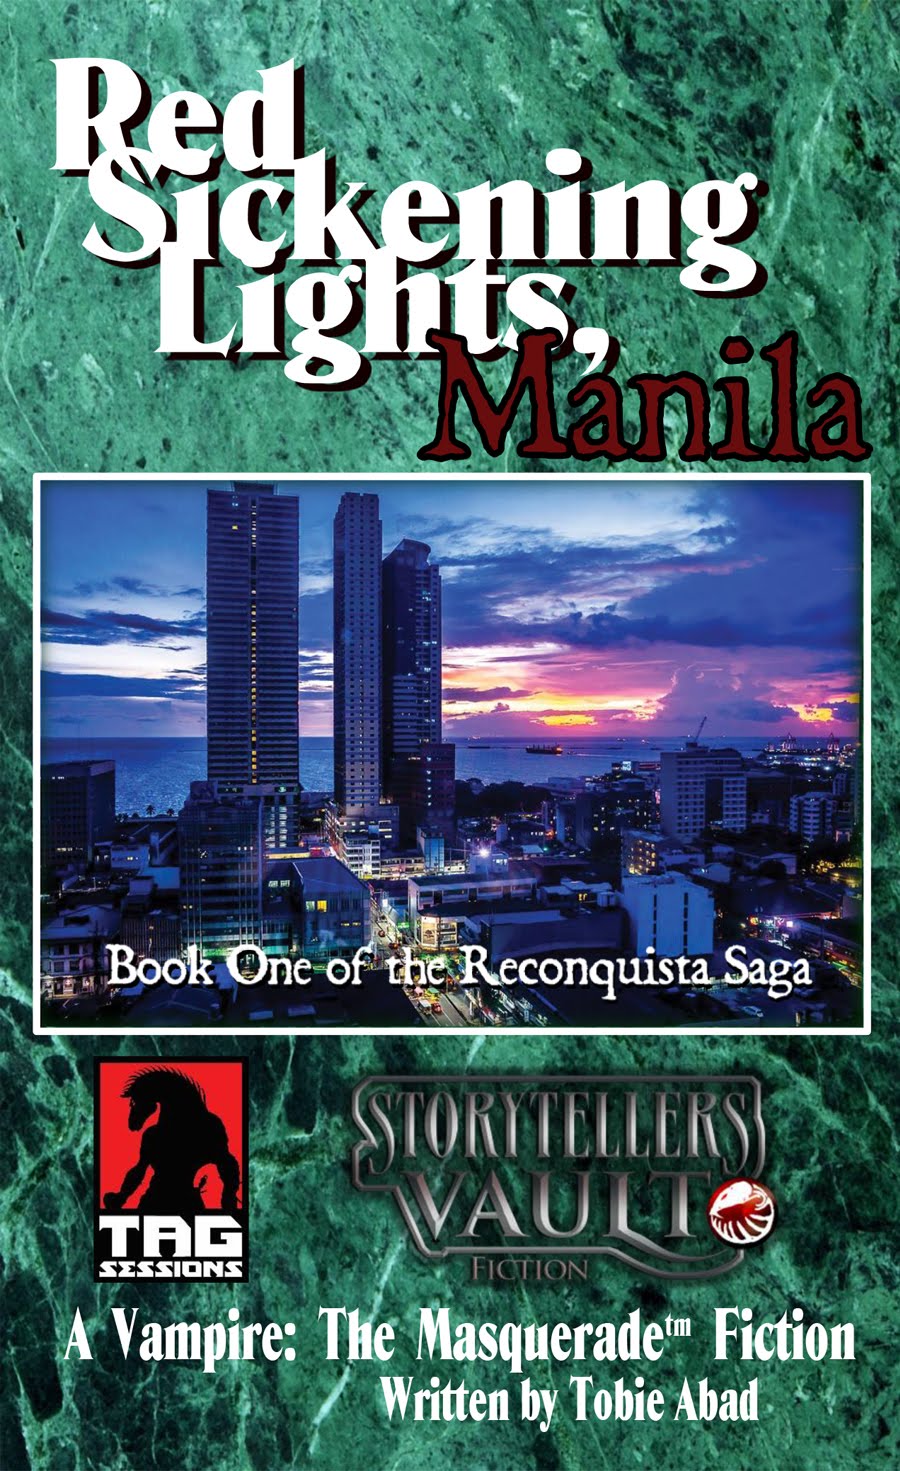 Red, Sickening Lights Manila